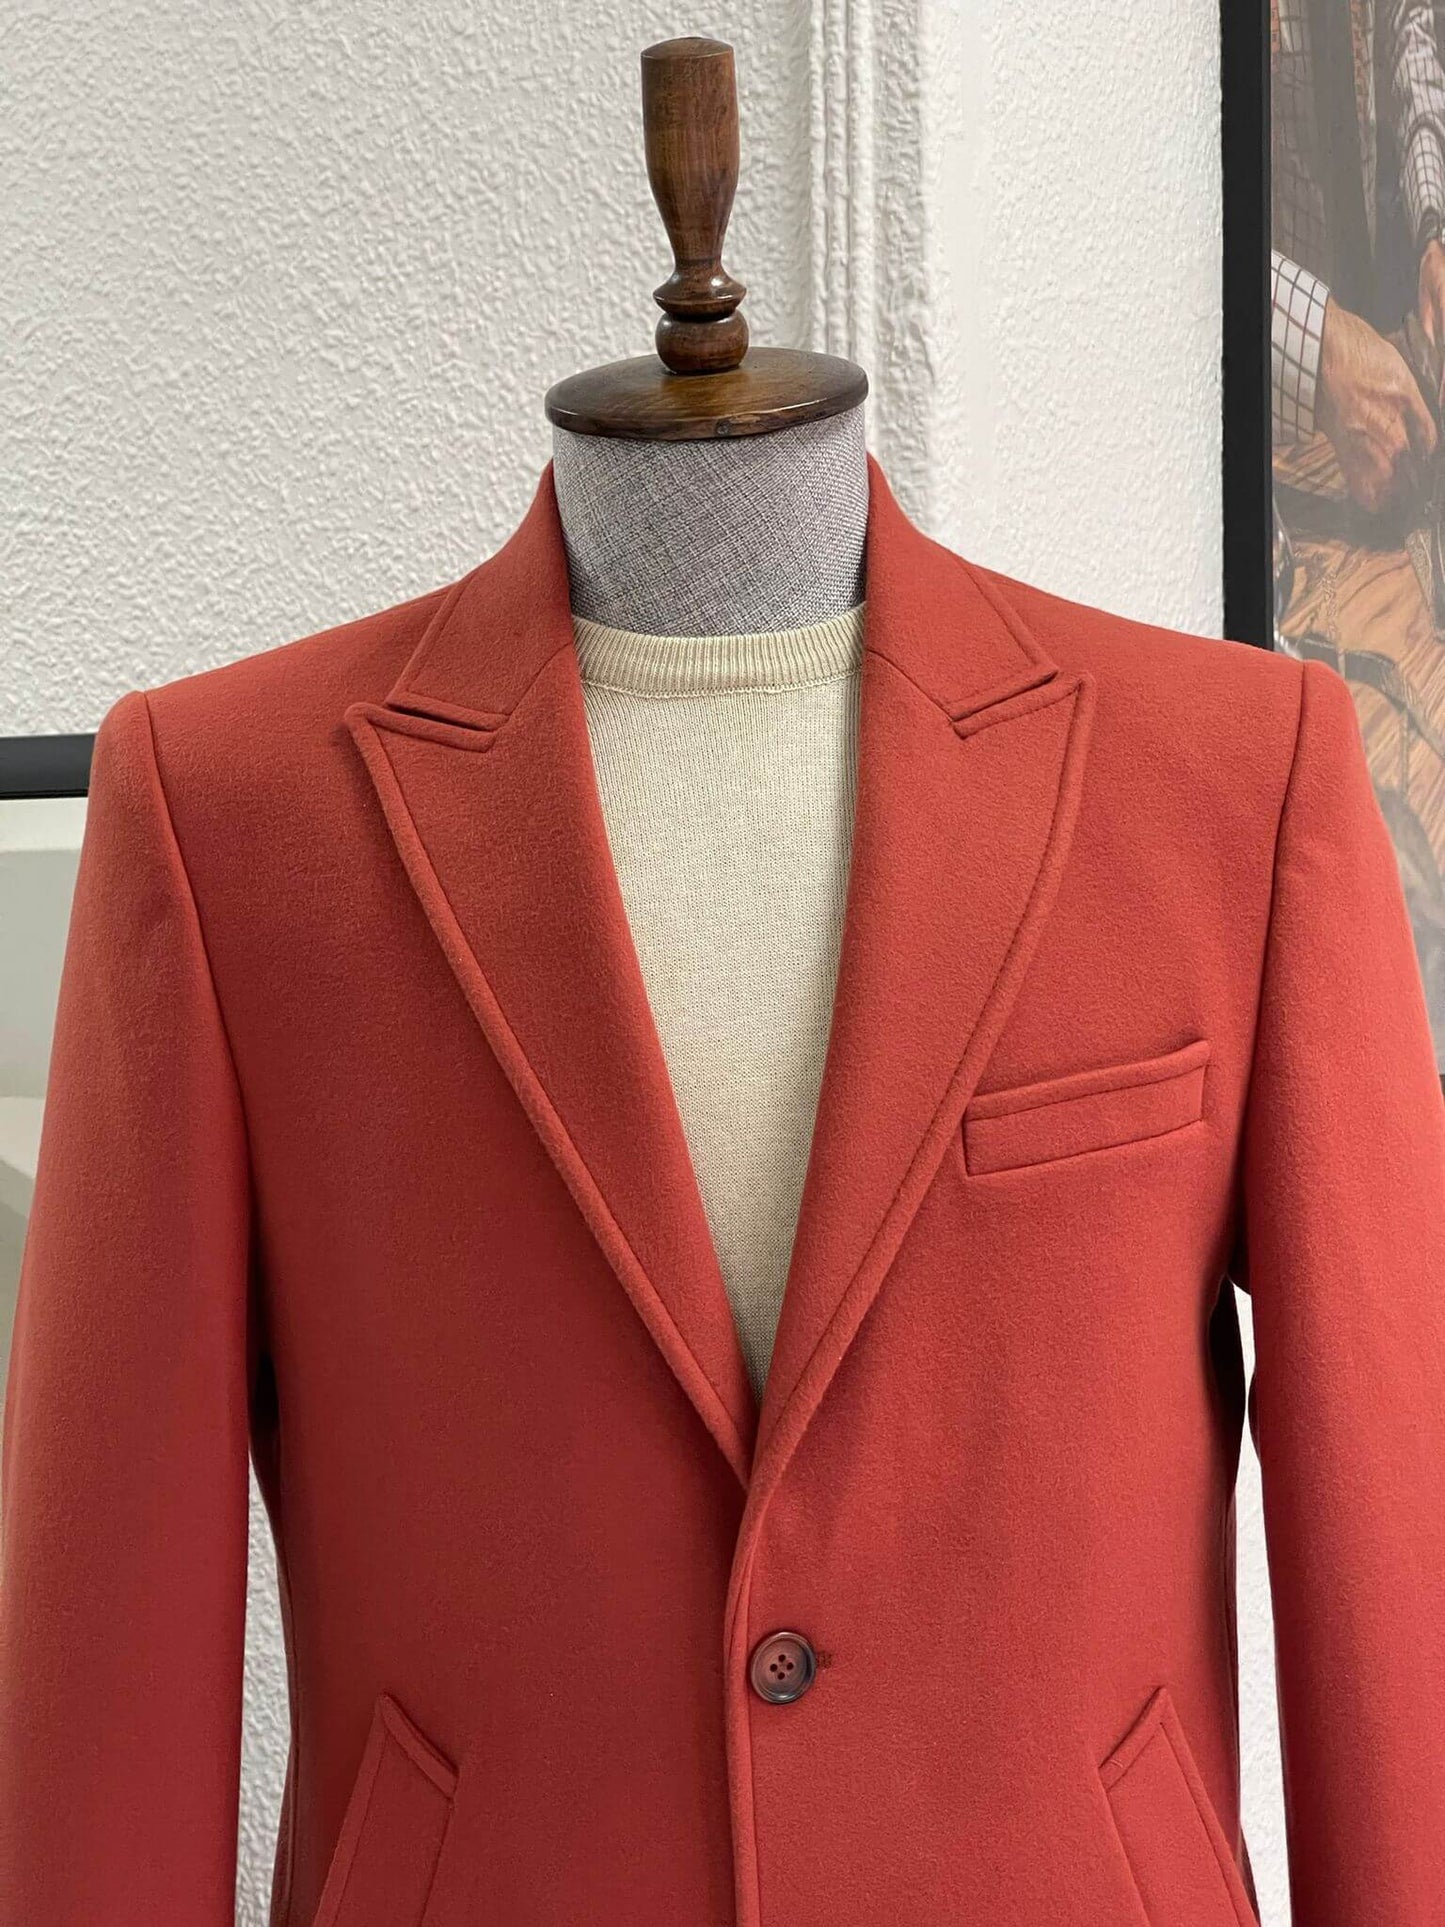 Stylish wool coat featuring Birmingham Tile design